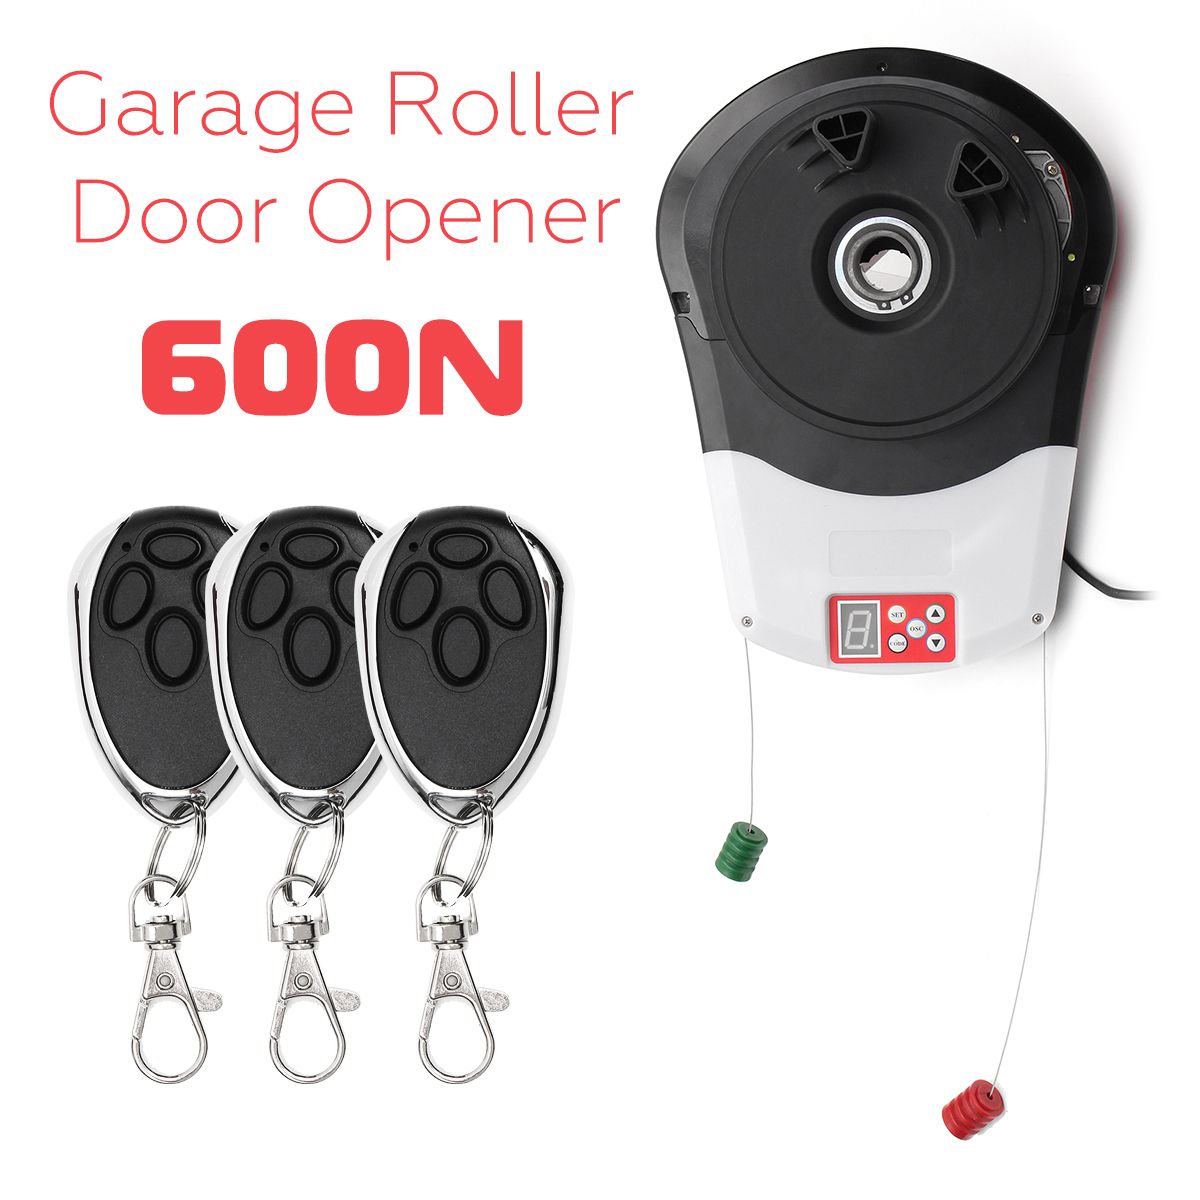 473323cm-220-240V-600N-Auto-Garage-Roller-Door-Opener-with-three-Remote-Control-Switch-1561558